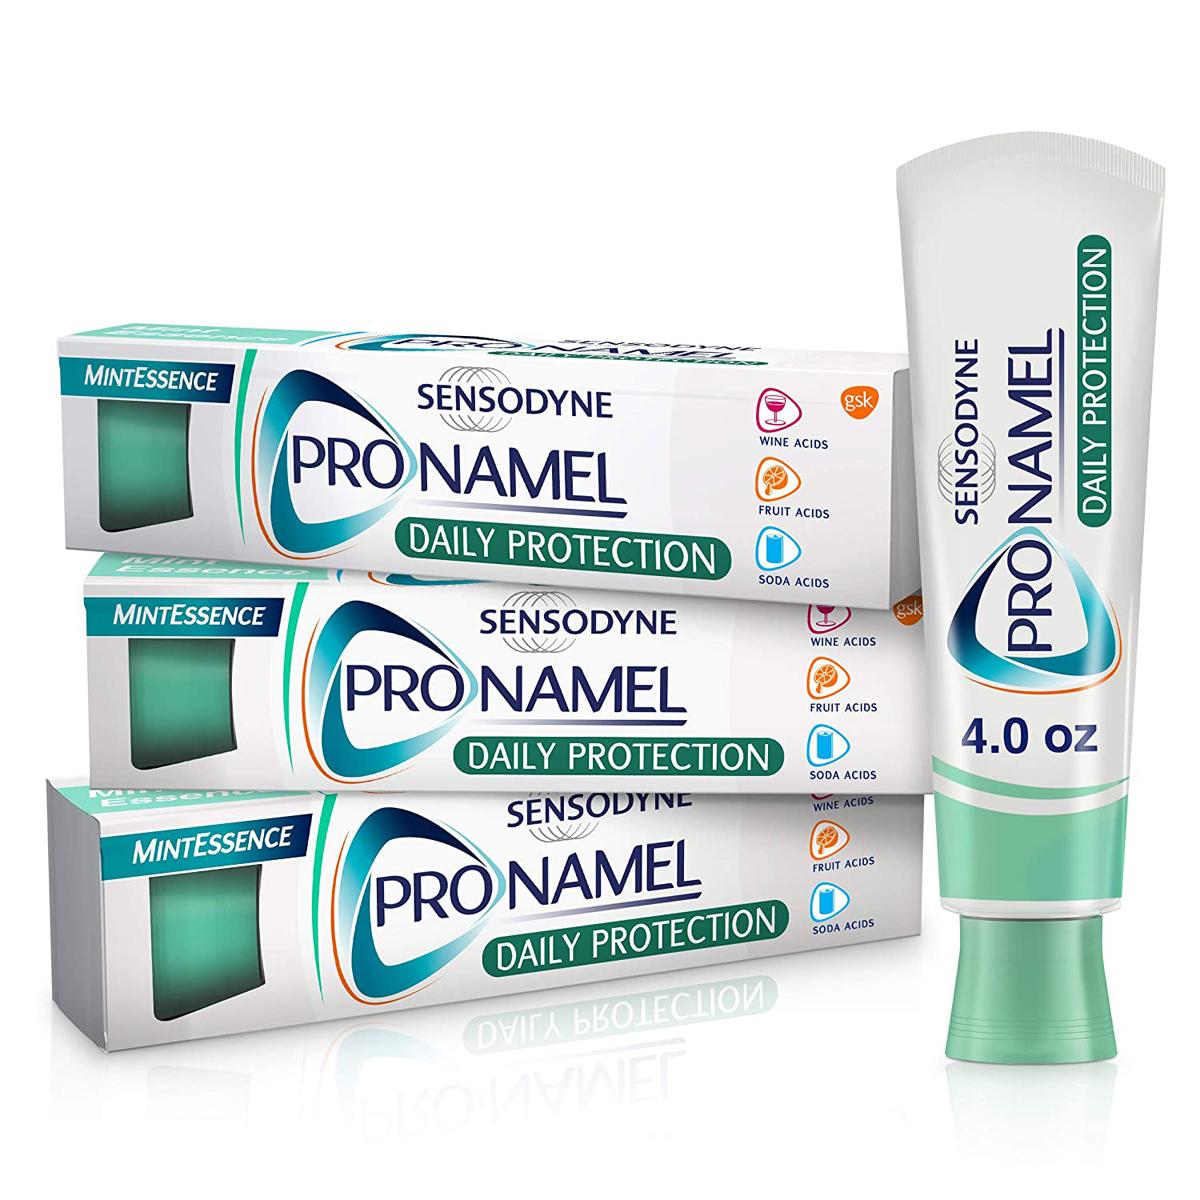 3 Sensodyne Pronamel Daily Protection Enamel Toothpastes for $9.56 Shipped